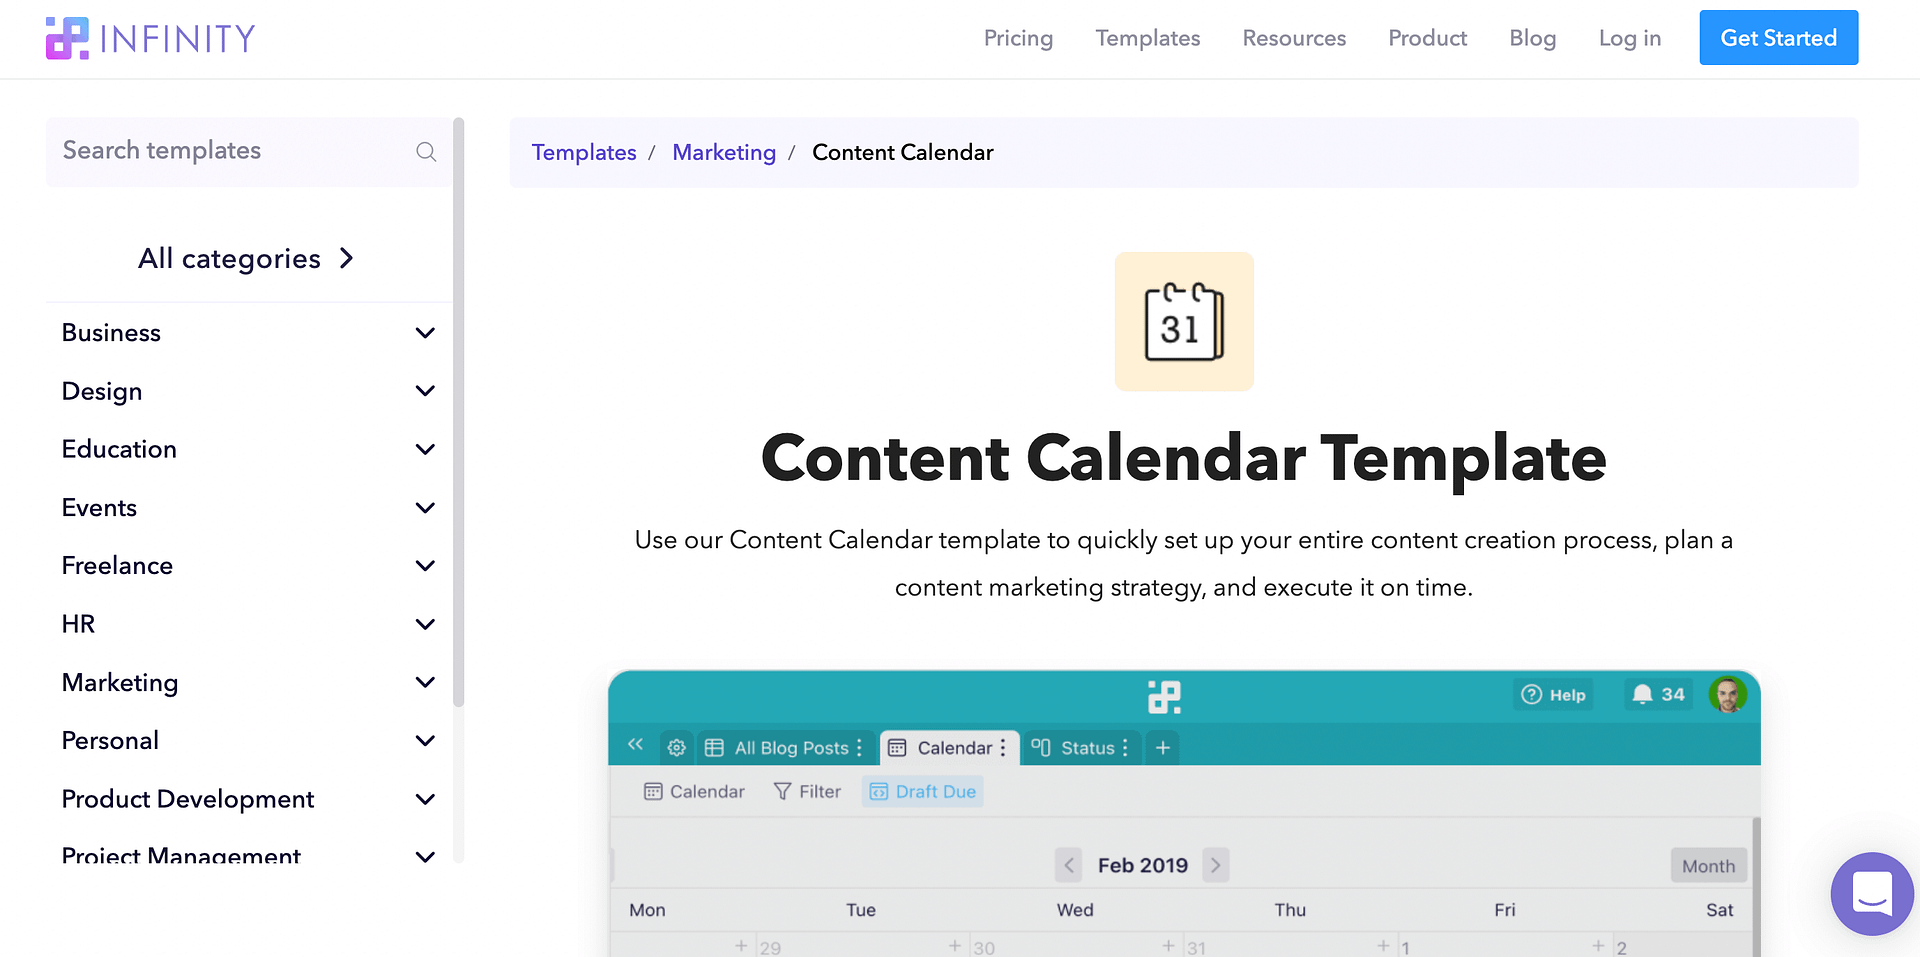 An example of an Infinity content calendar template